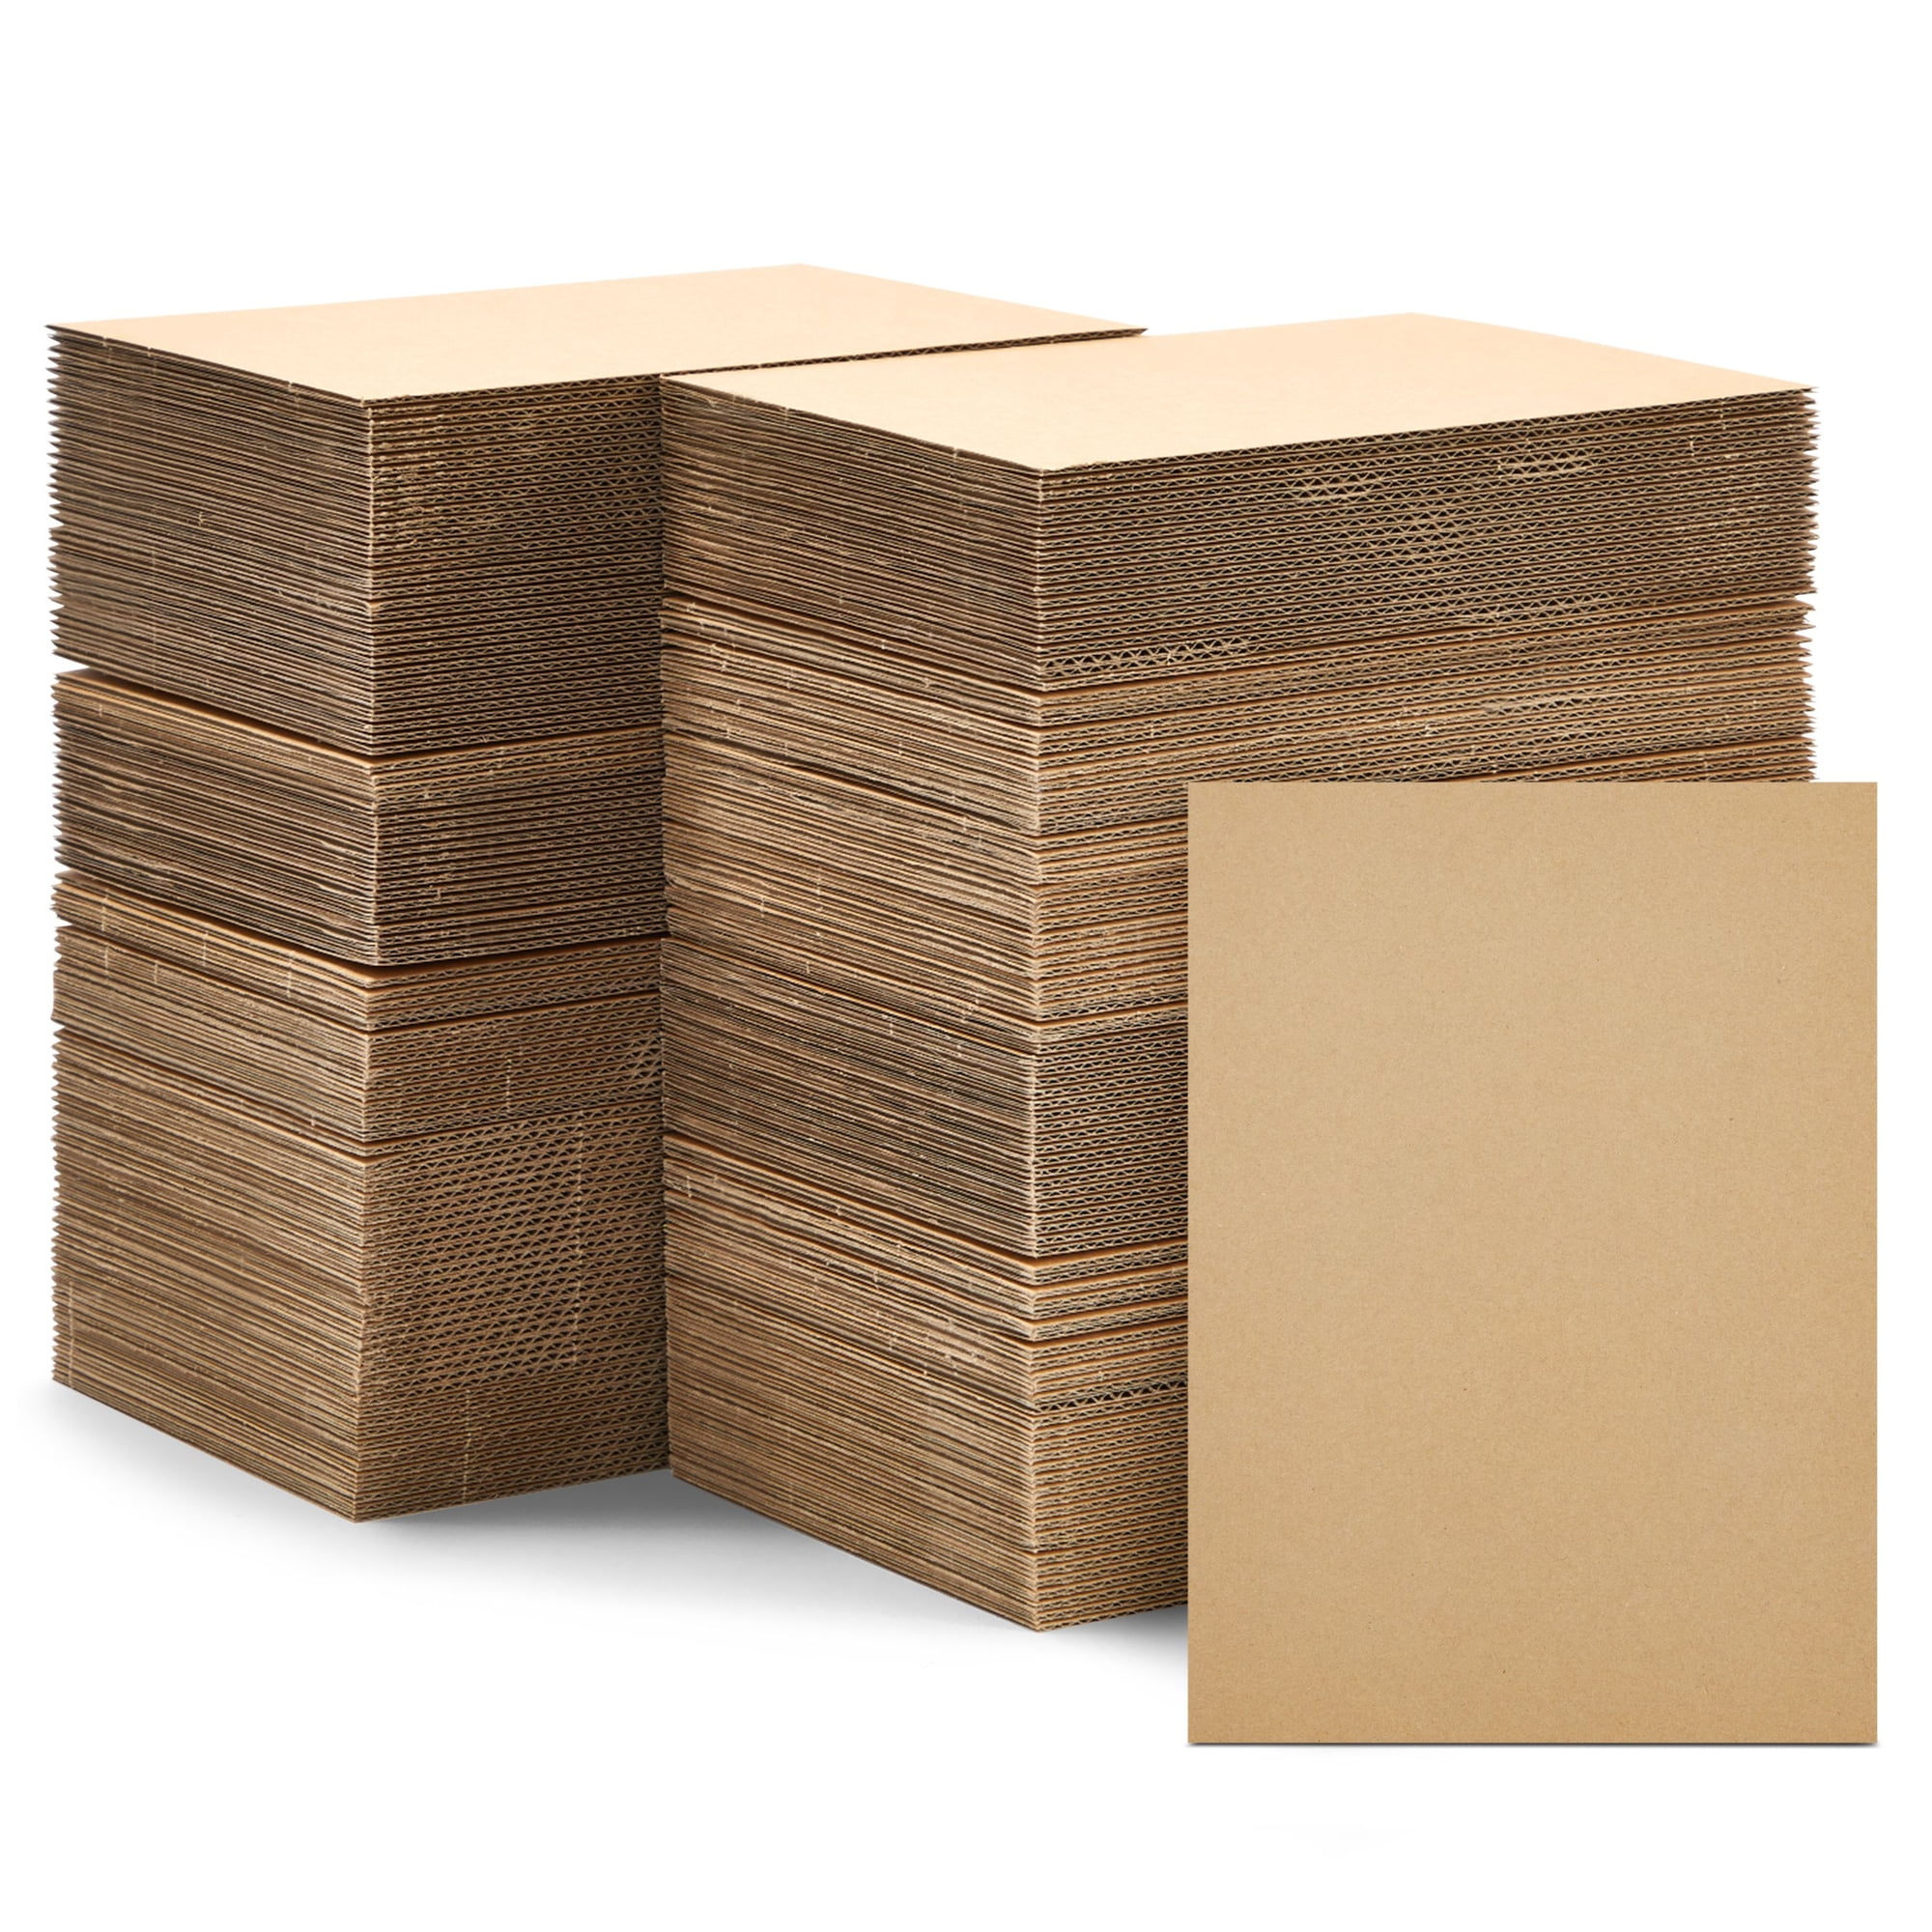  HOZEON 300 Pack Corrugated Cardboard Sheets 5 x 7 x 1